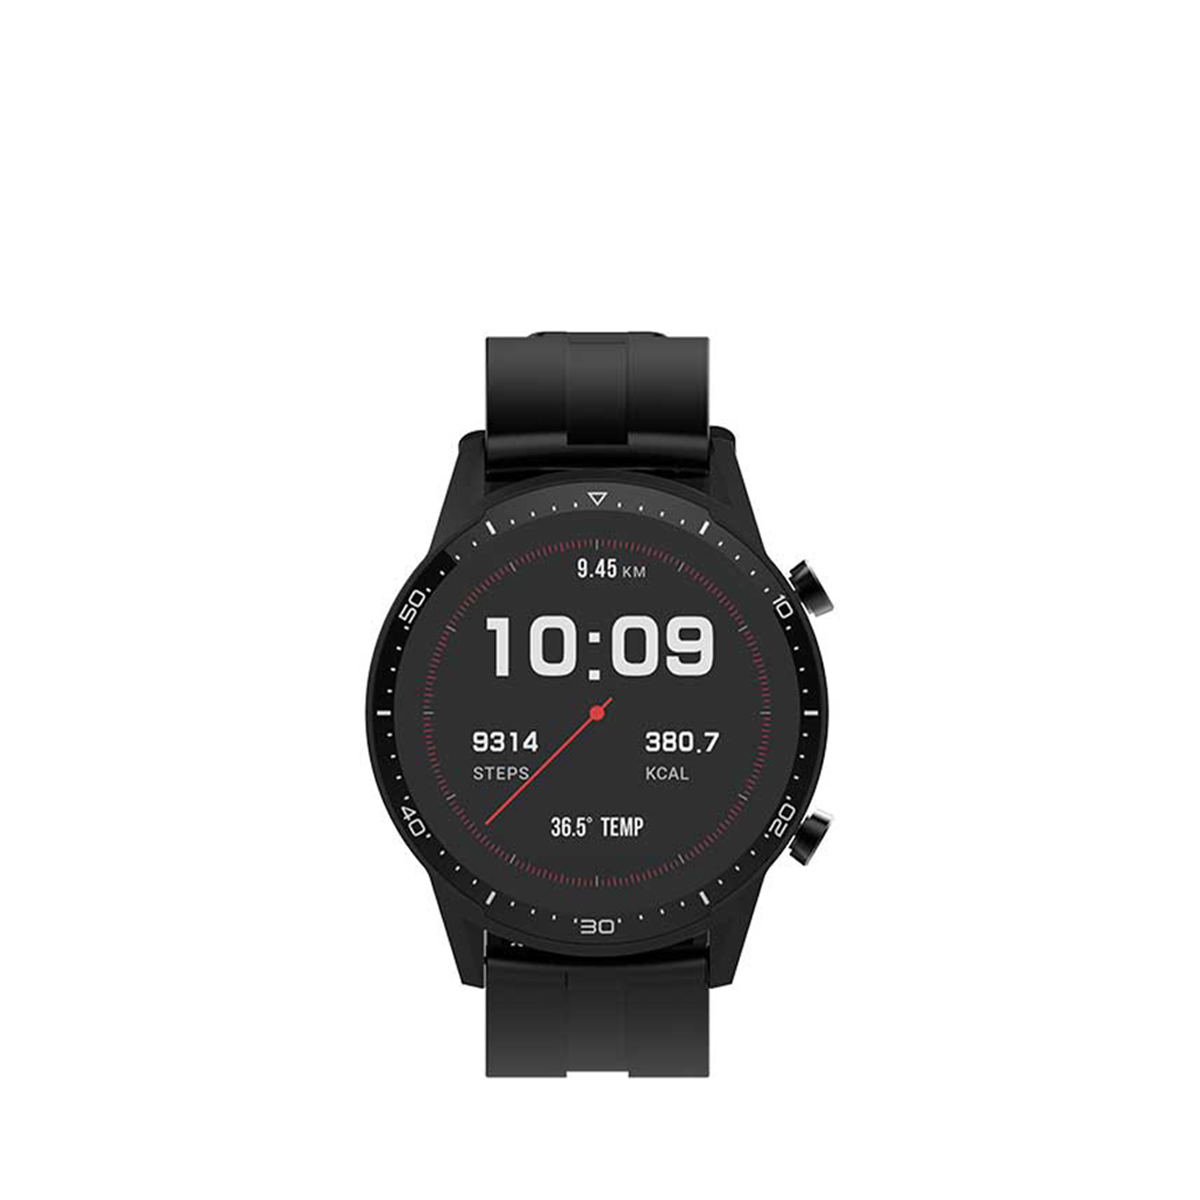 Smartwatch Swb29 Prixton Alexa - negro - 